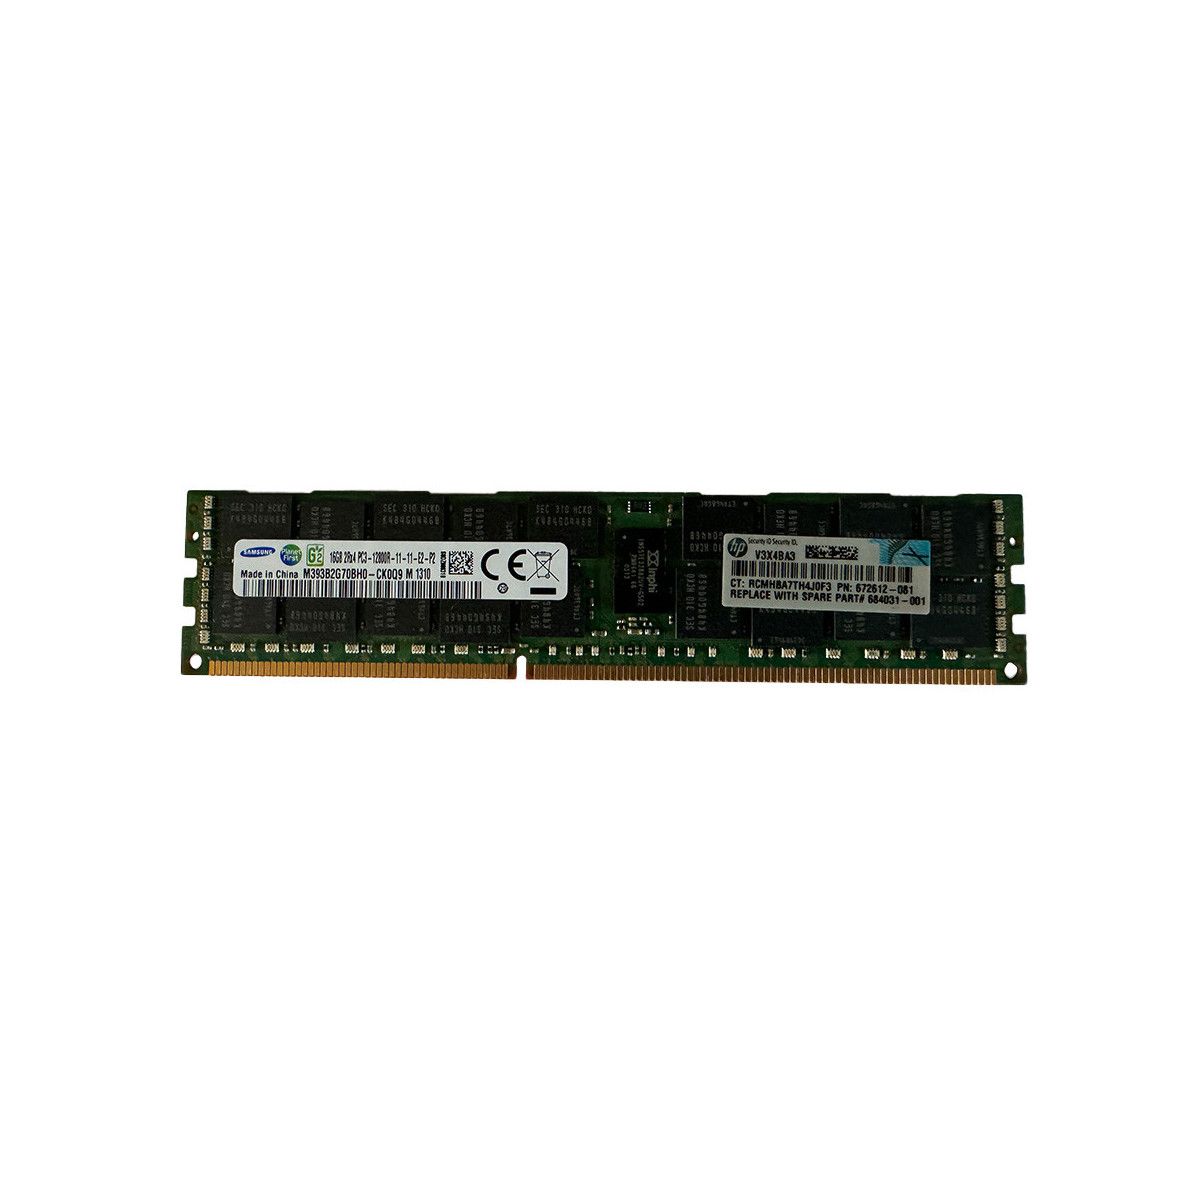 7102800-MS - Memstar 1x 16GB DDR3-1600 RDIMM PC3L-12800R